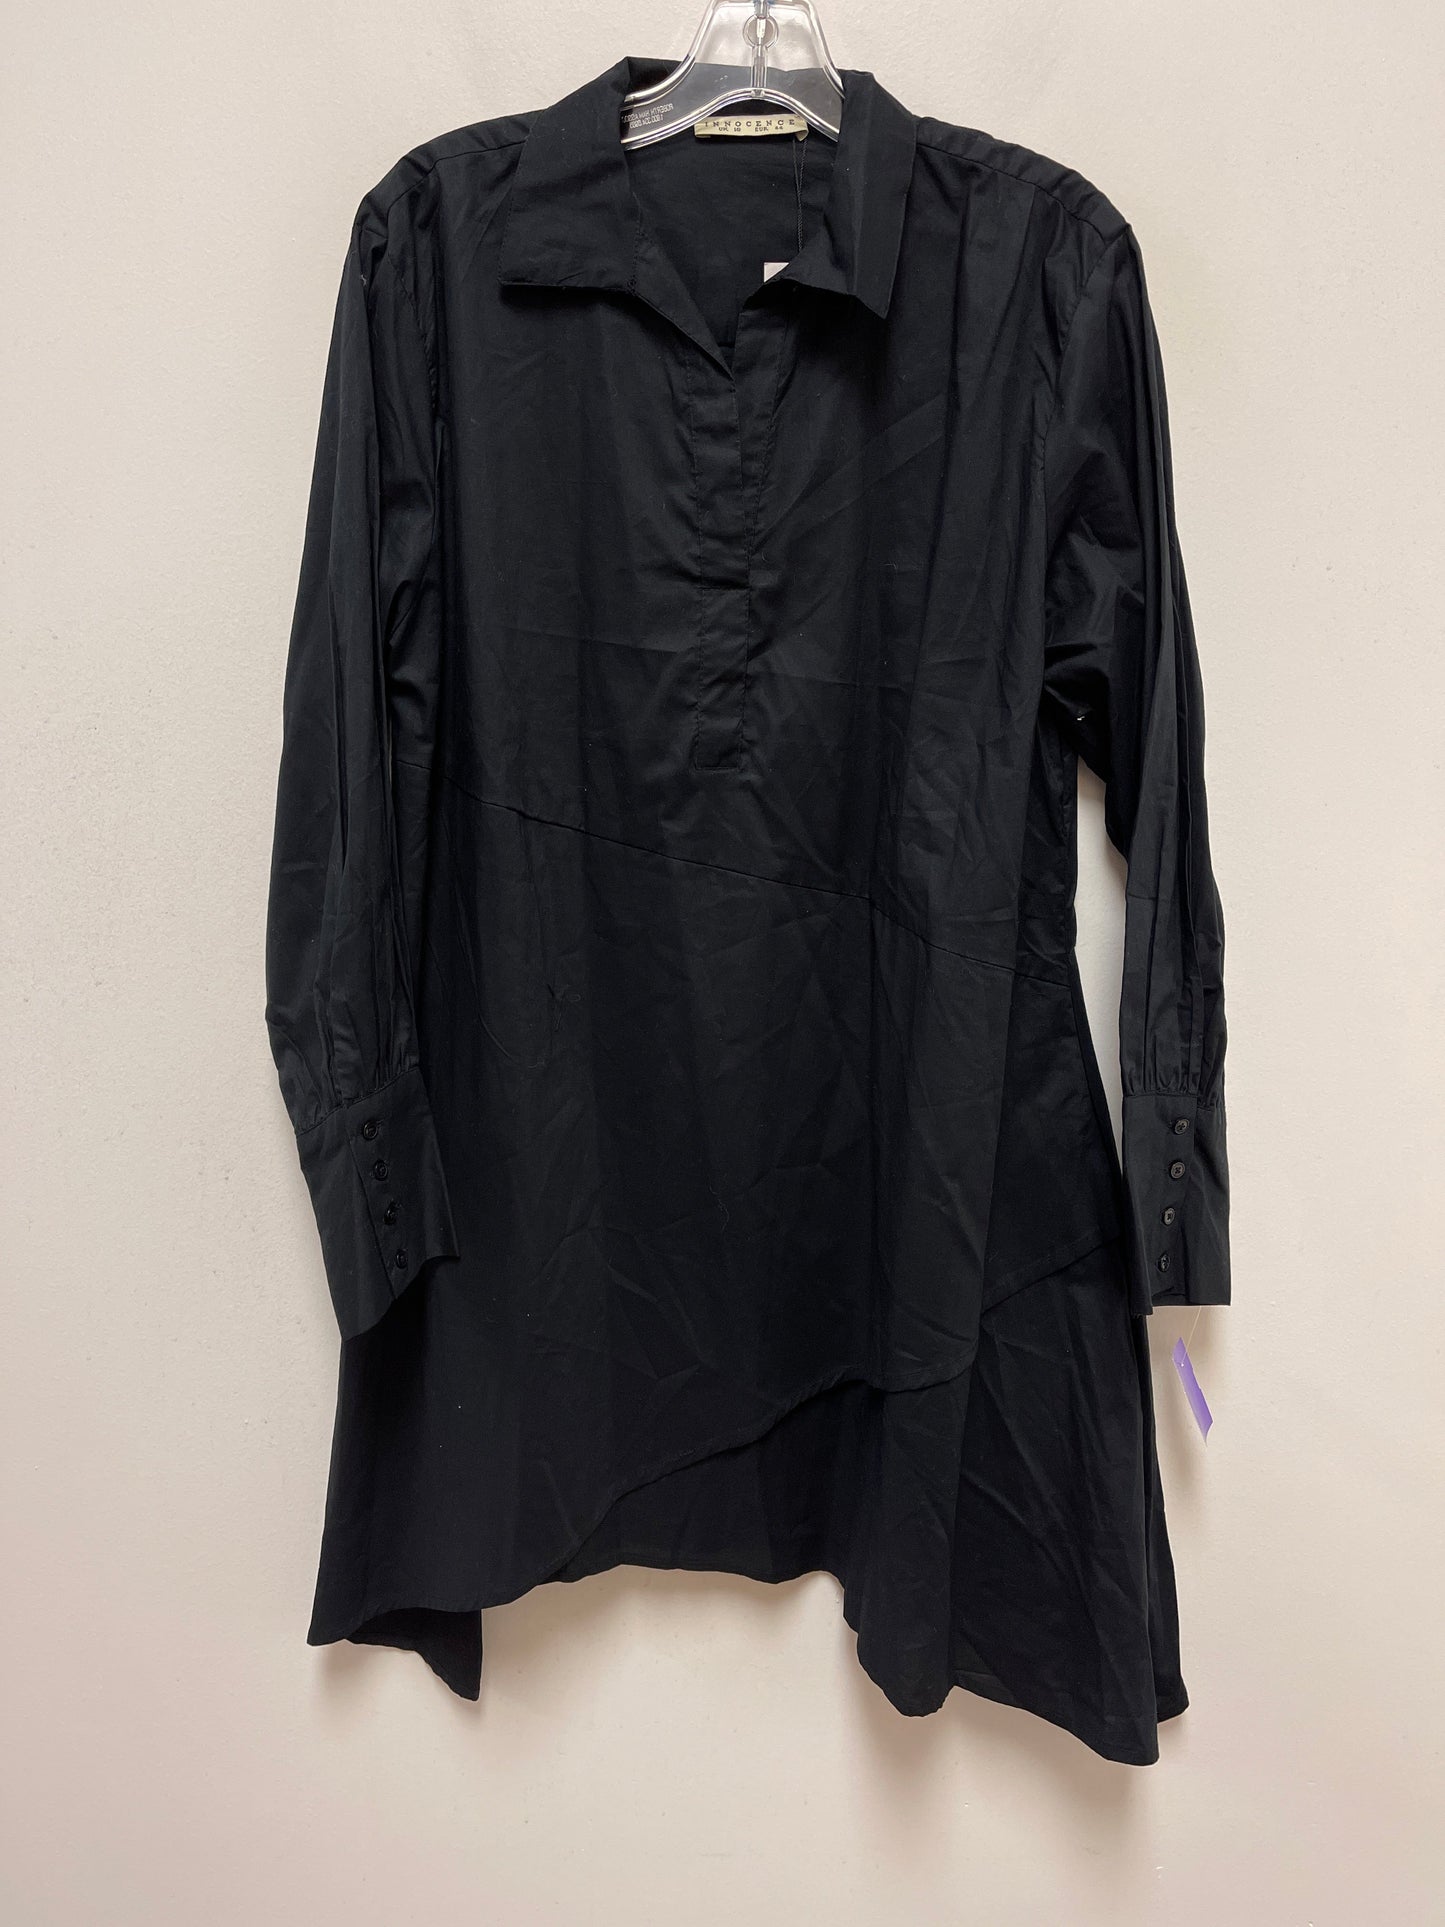 Black Dress Casual Midi Clothes Mentor, Size 1x